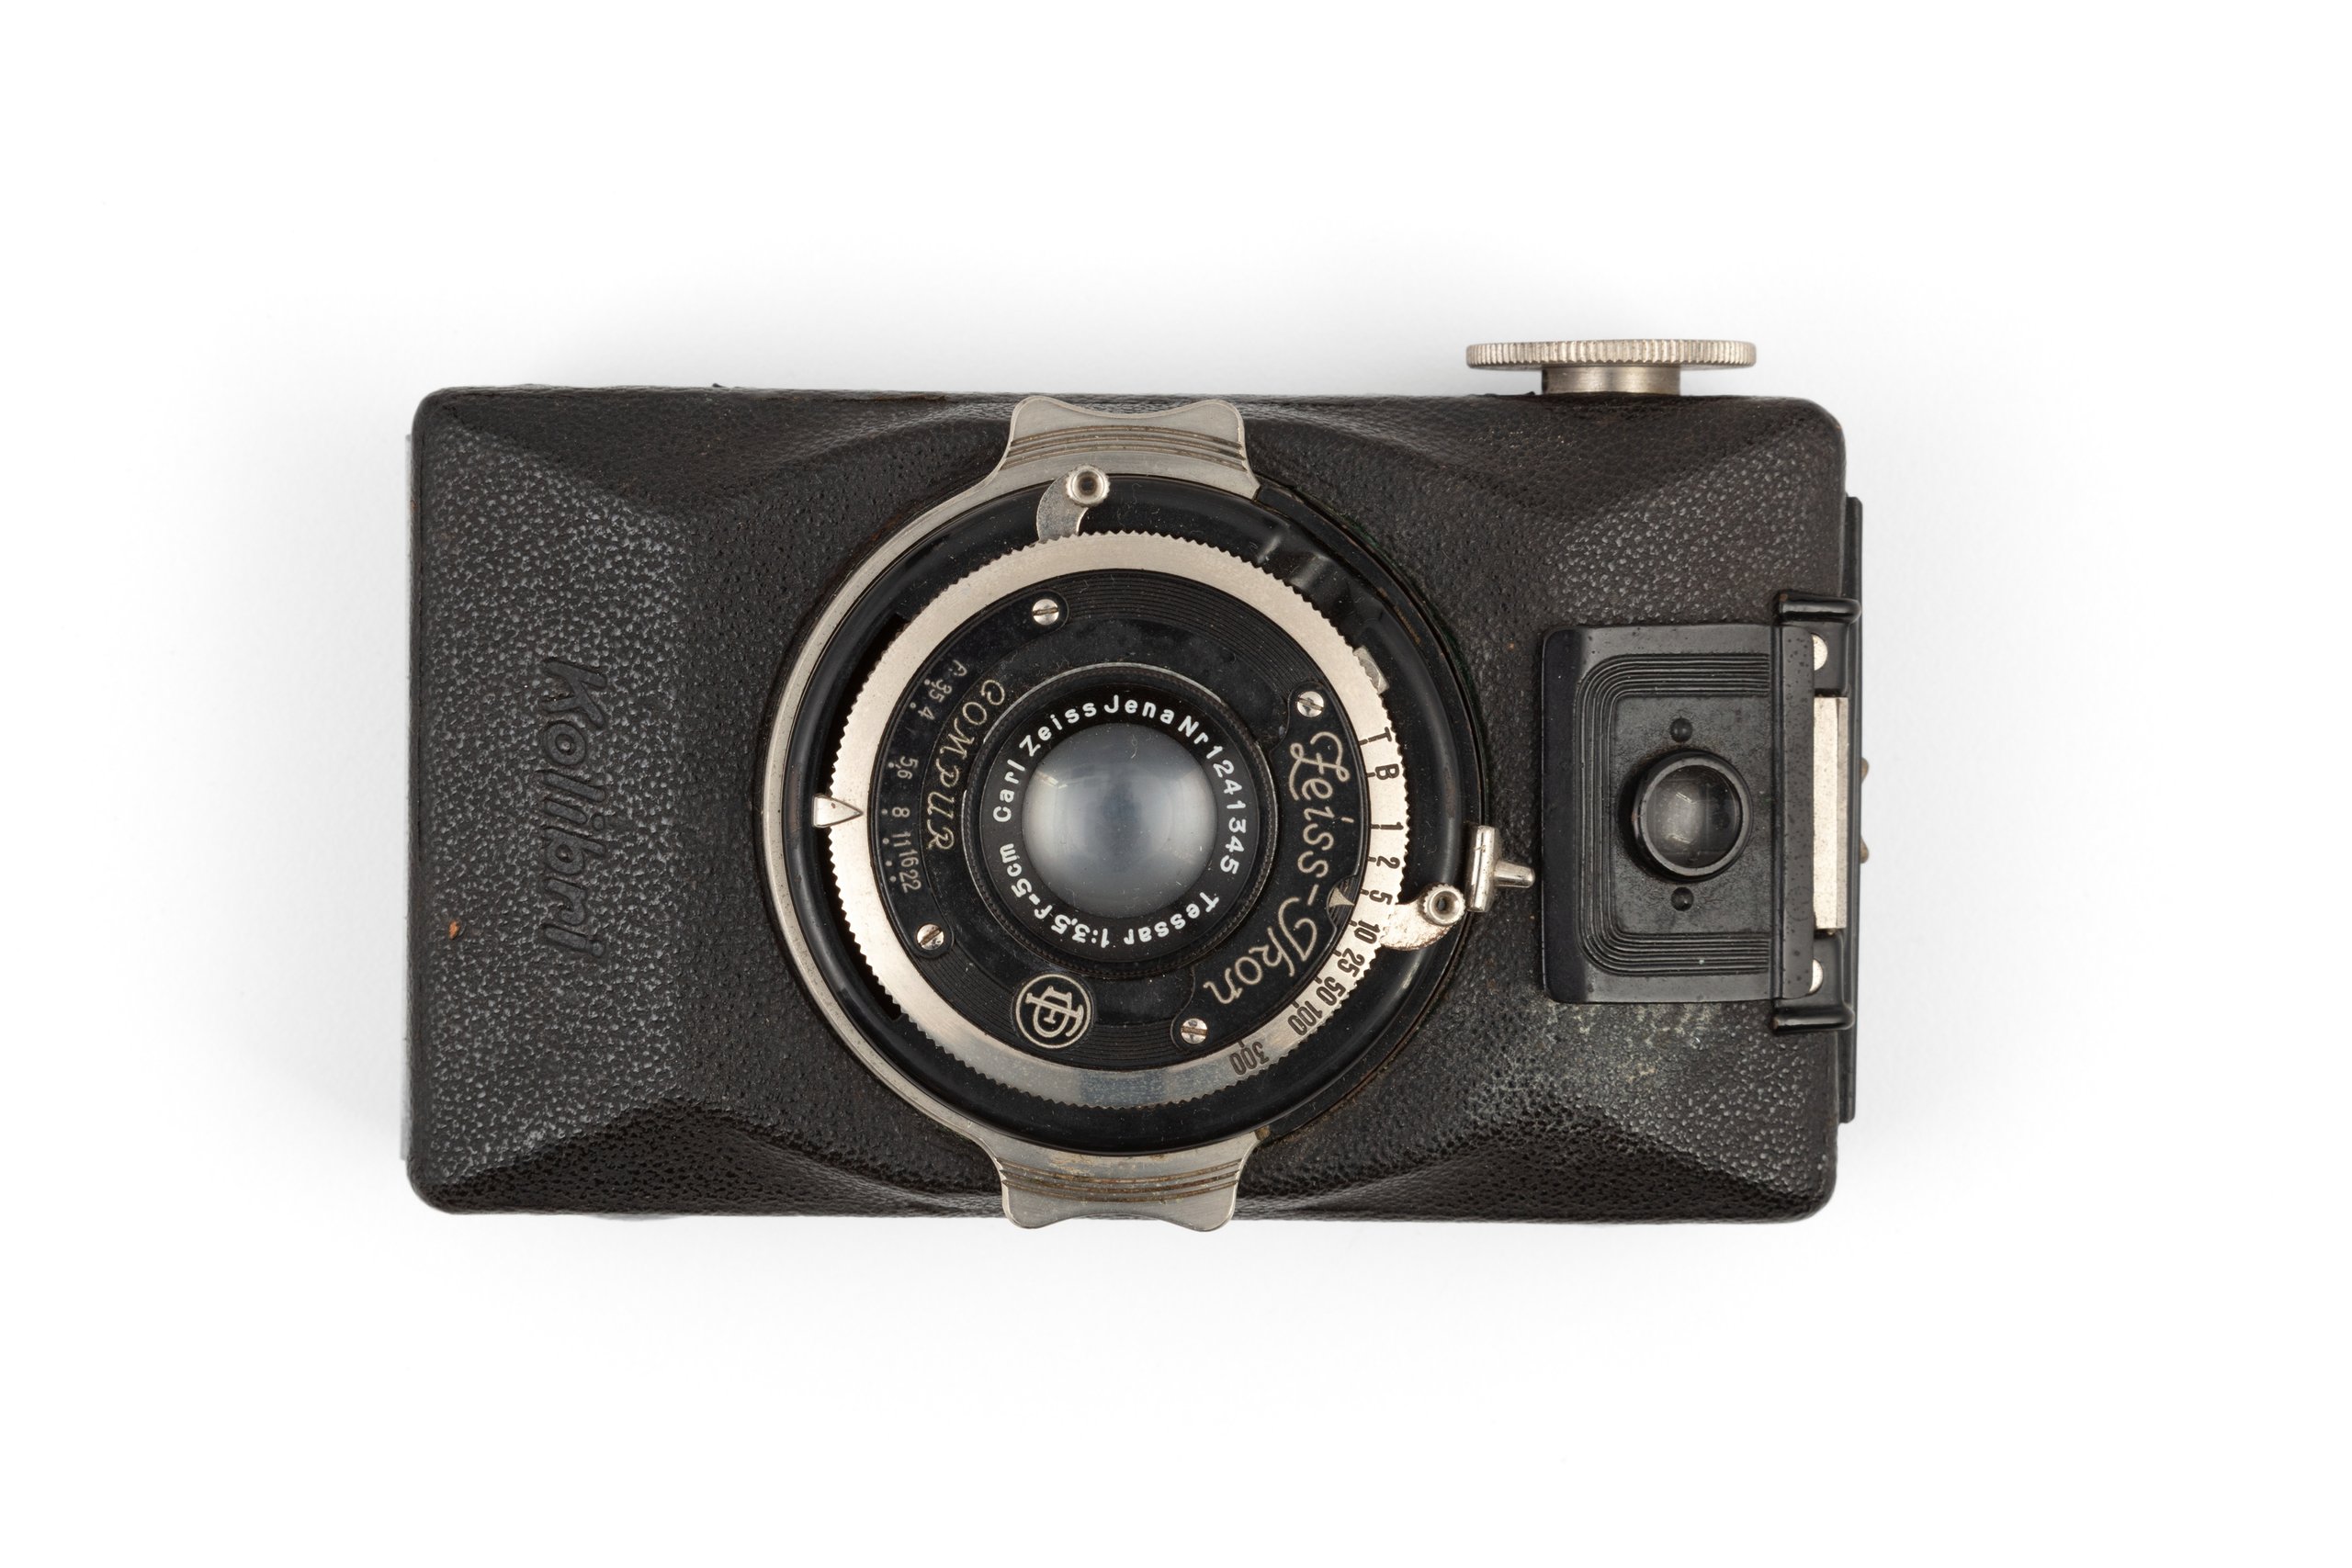 A Kolibri pocket camera made by Zeiss Ikon